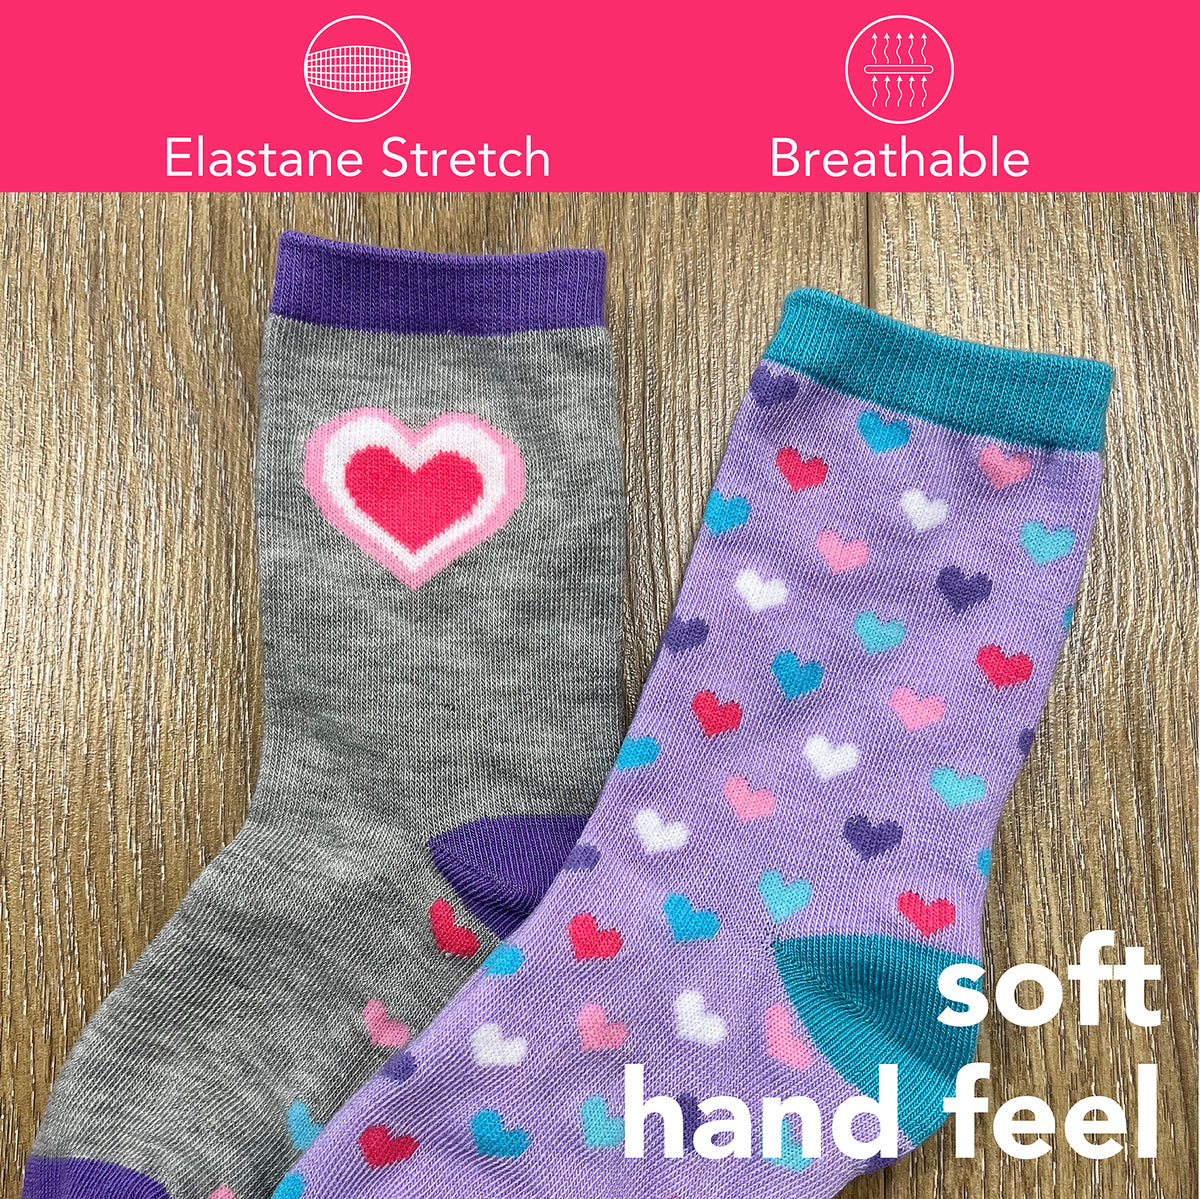 Multi Hearts Design Ankle Socks 8 Pack